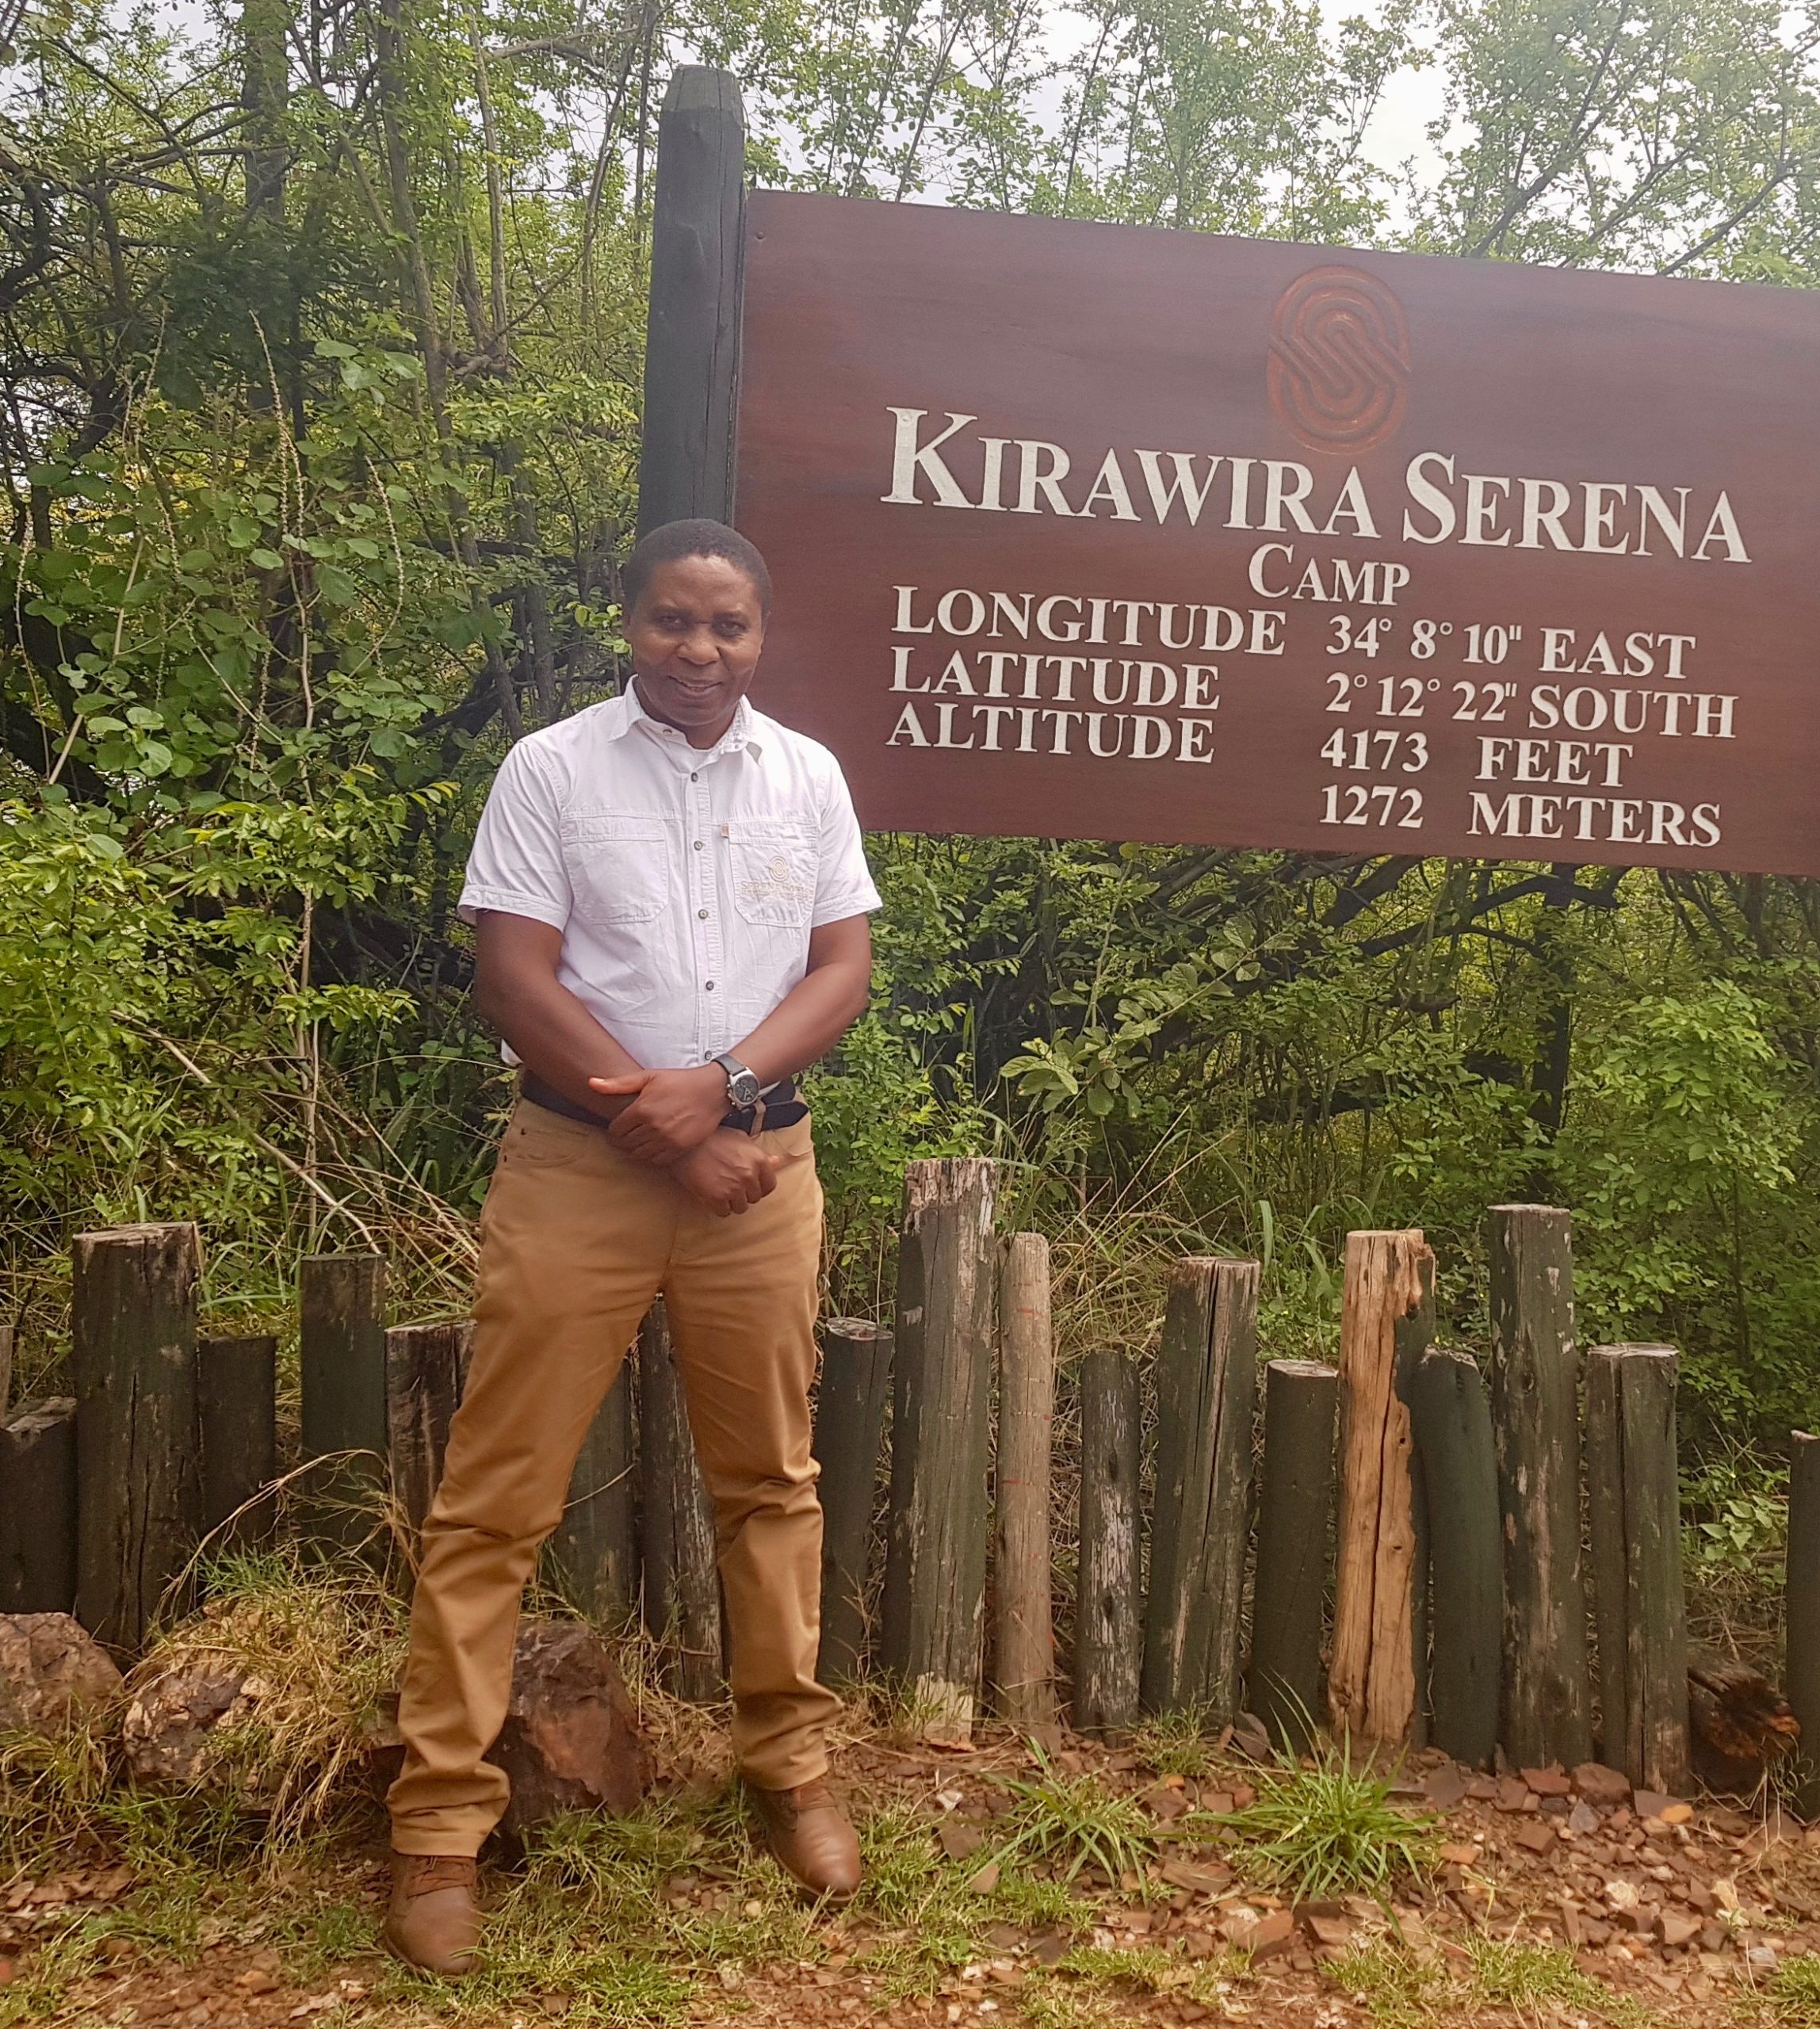 Daniel Mkina, Camp Manager at Kirawira Serena Tented Camp